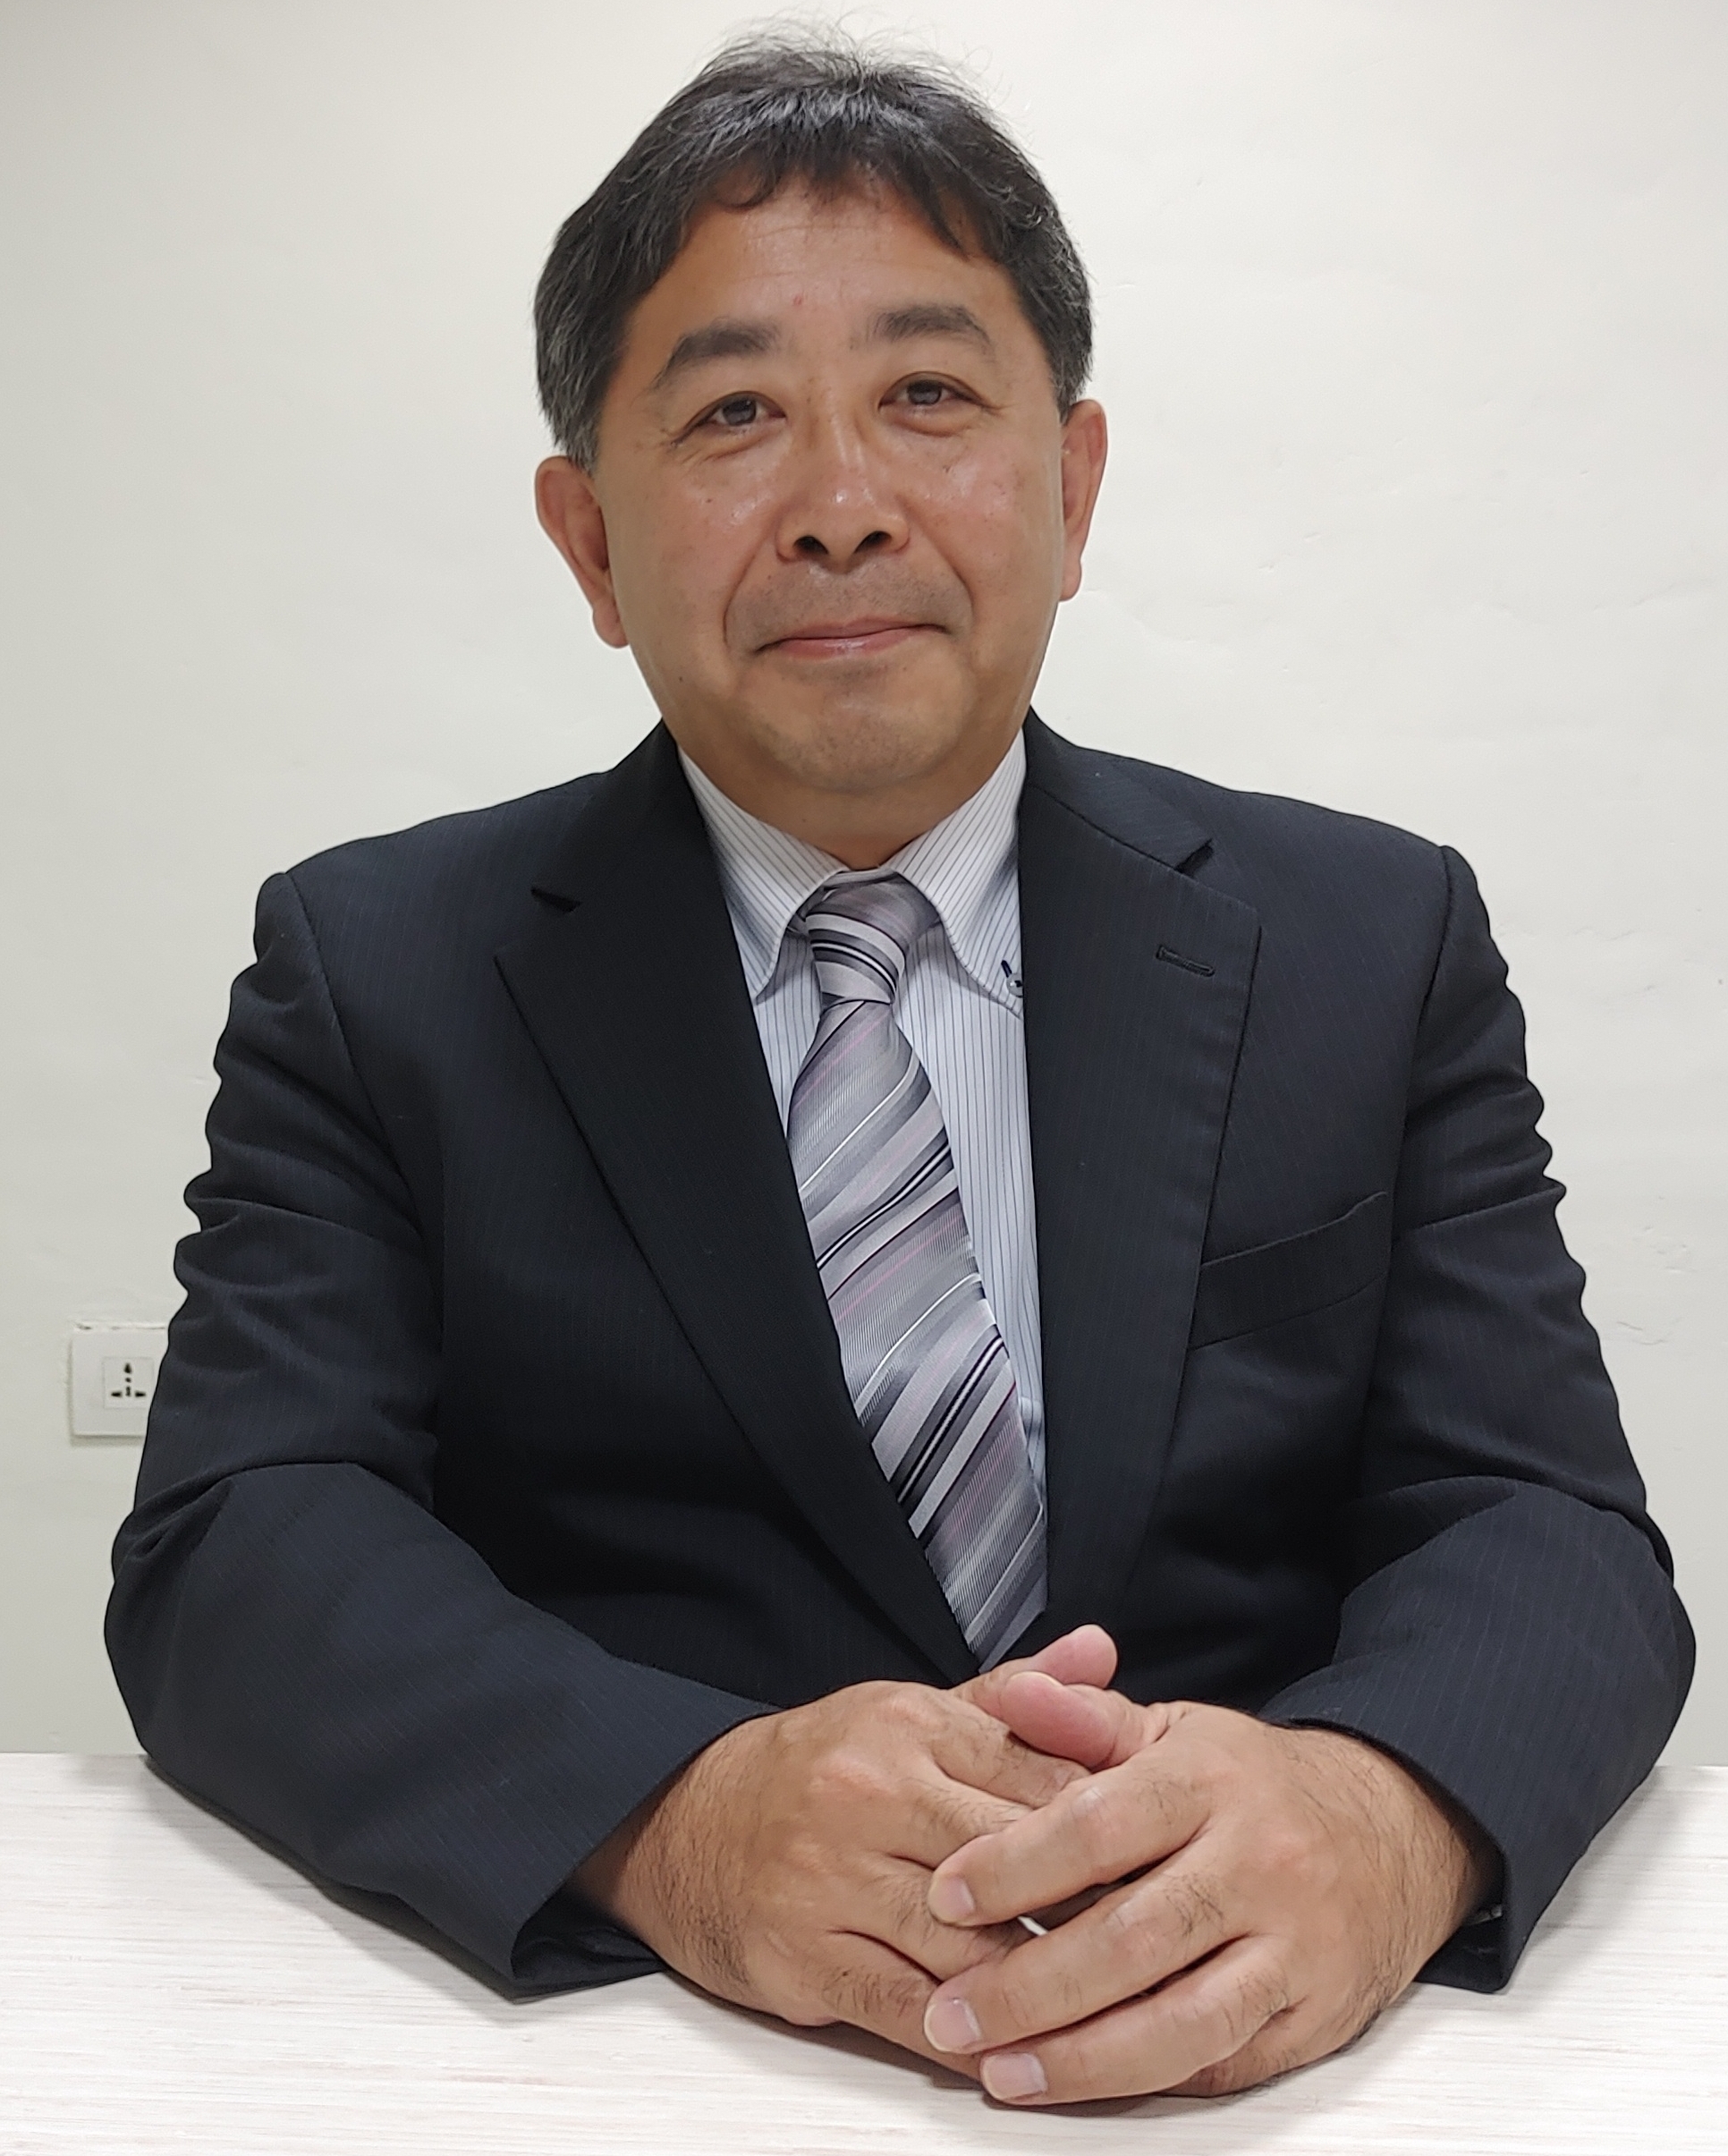 Mr. Hiroshi Furuta